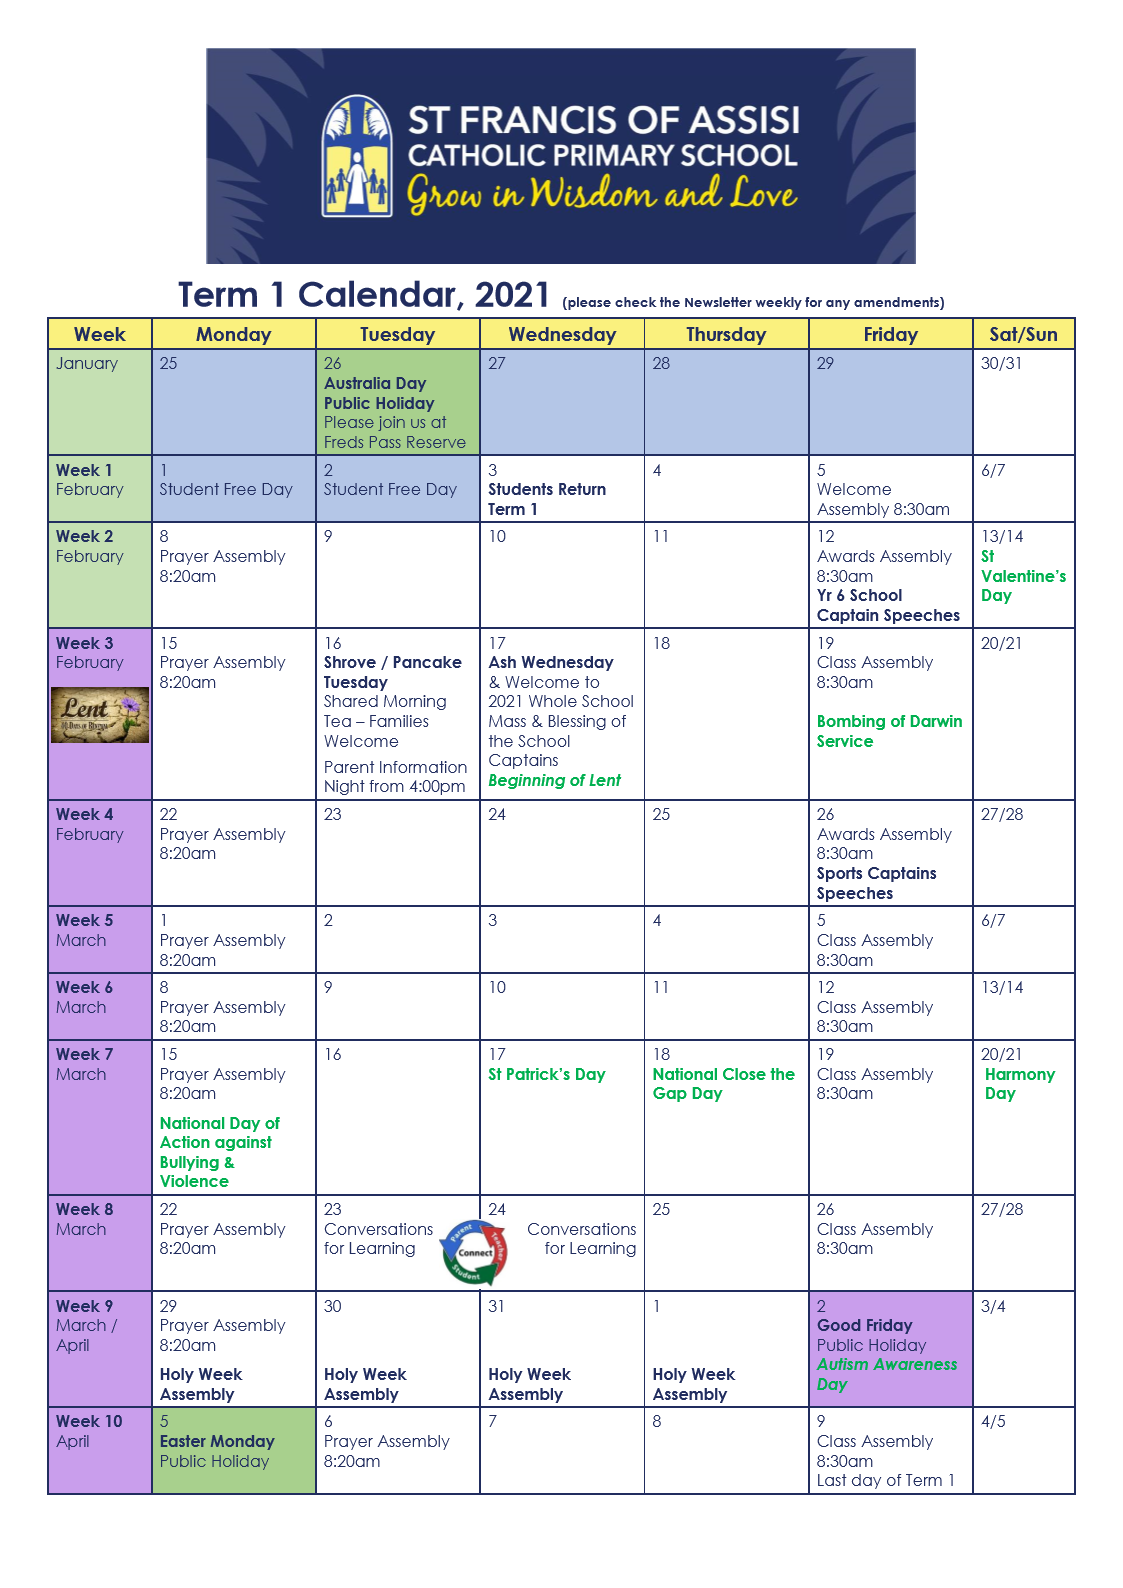 Term 1 2021 Calendar